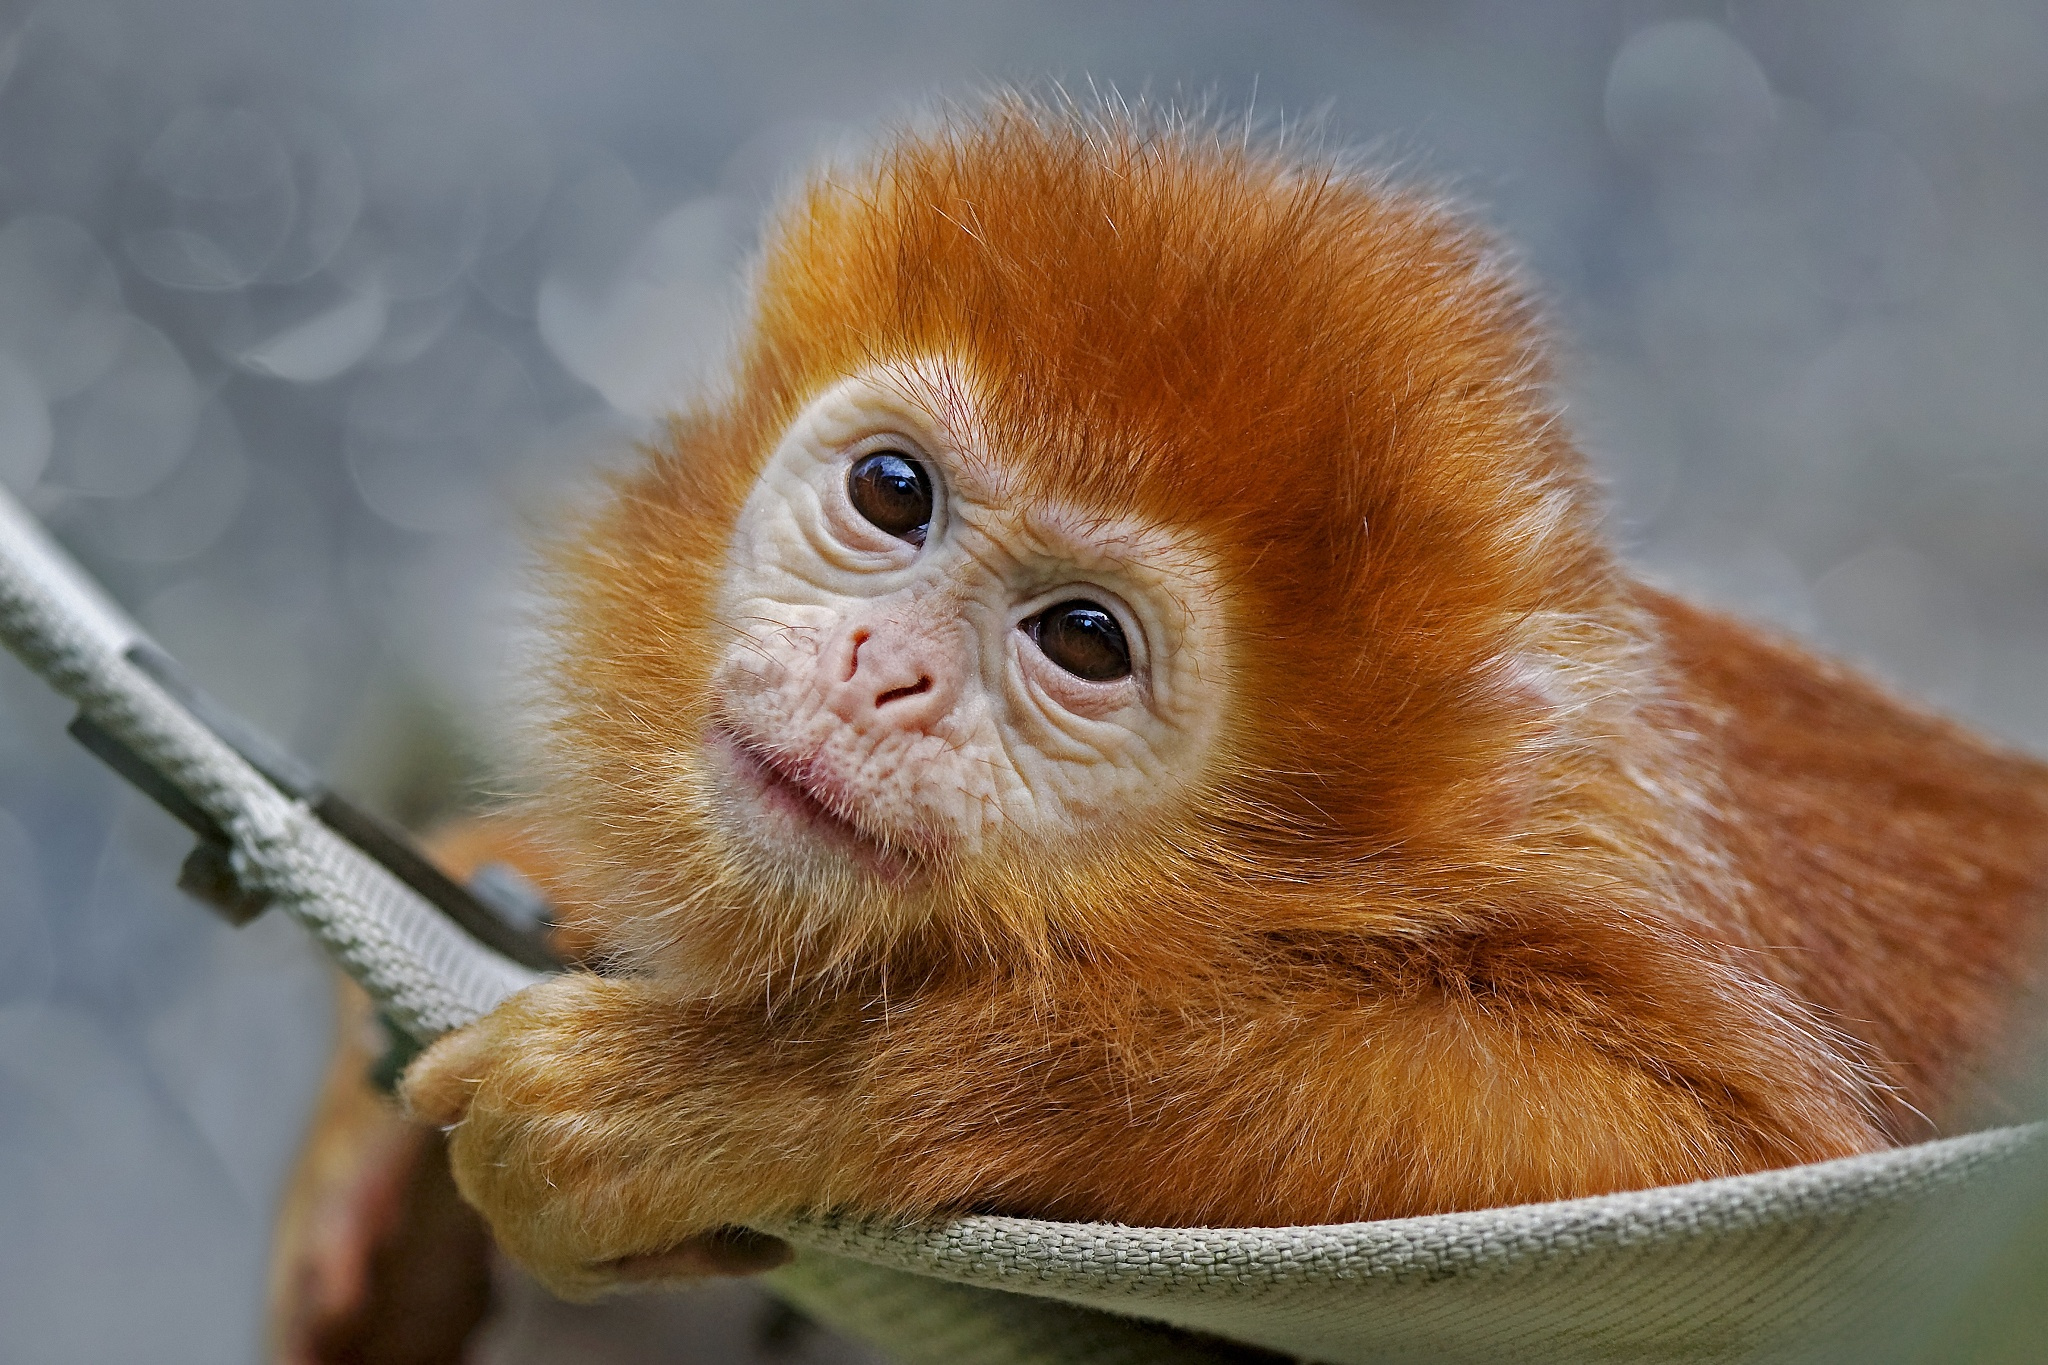 372982 descargar imagen animales, mono dorado de nariz chata, monos: fondos de pantalla y protectores de pantalla gratis